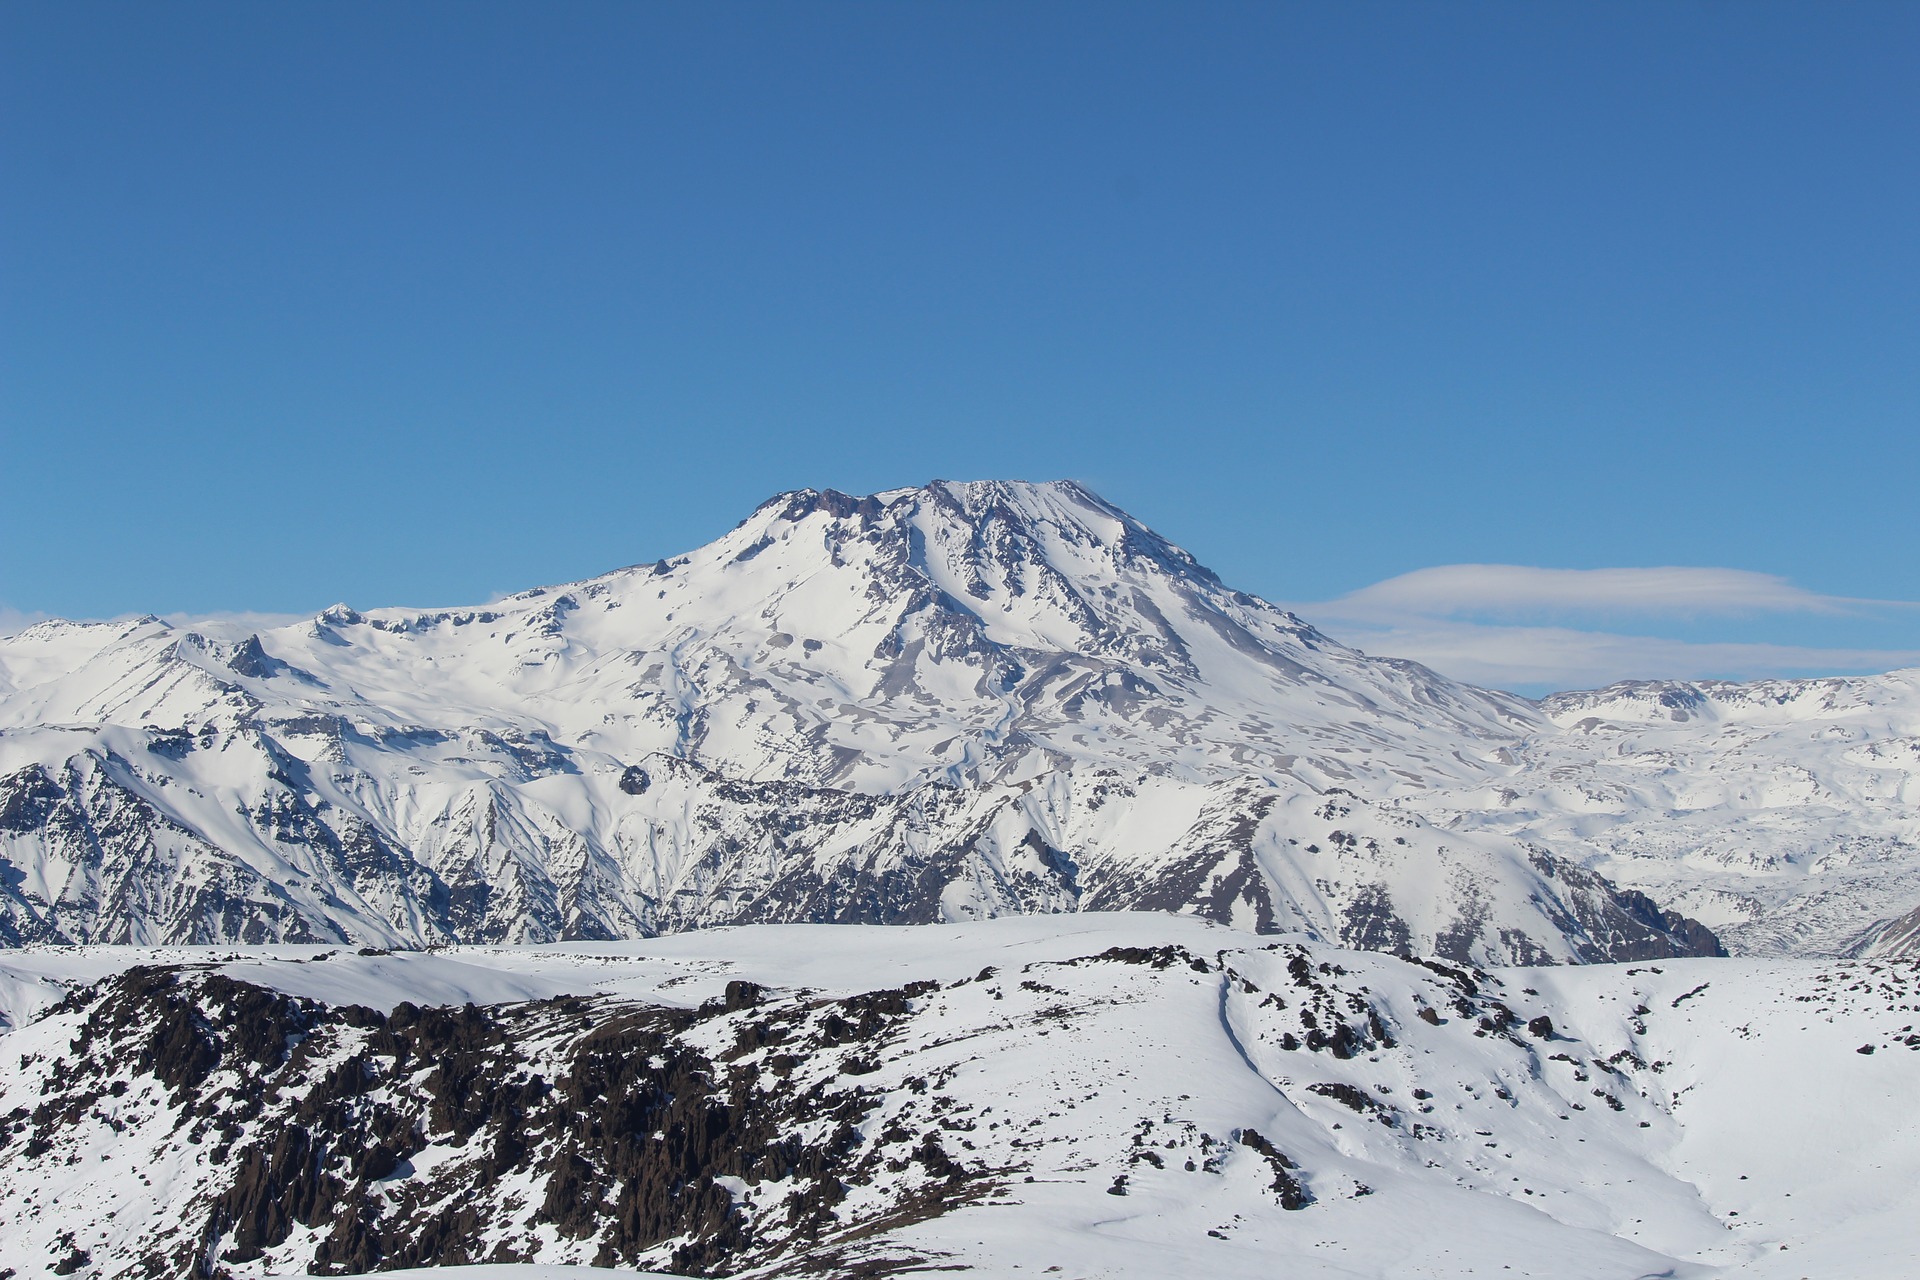 El Azufre, une station de ski durable au sein de la Cordillère des Andes